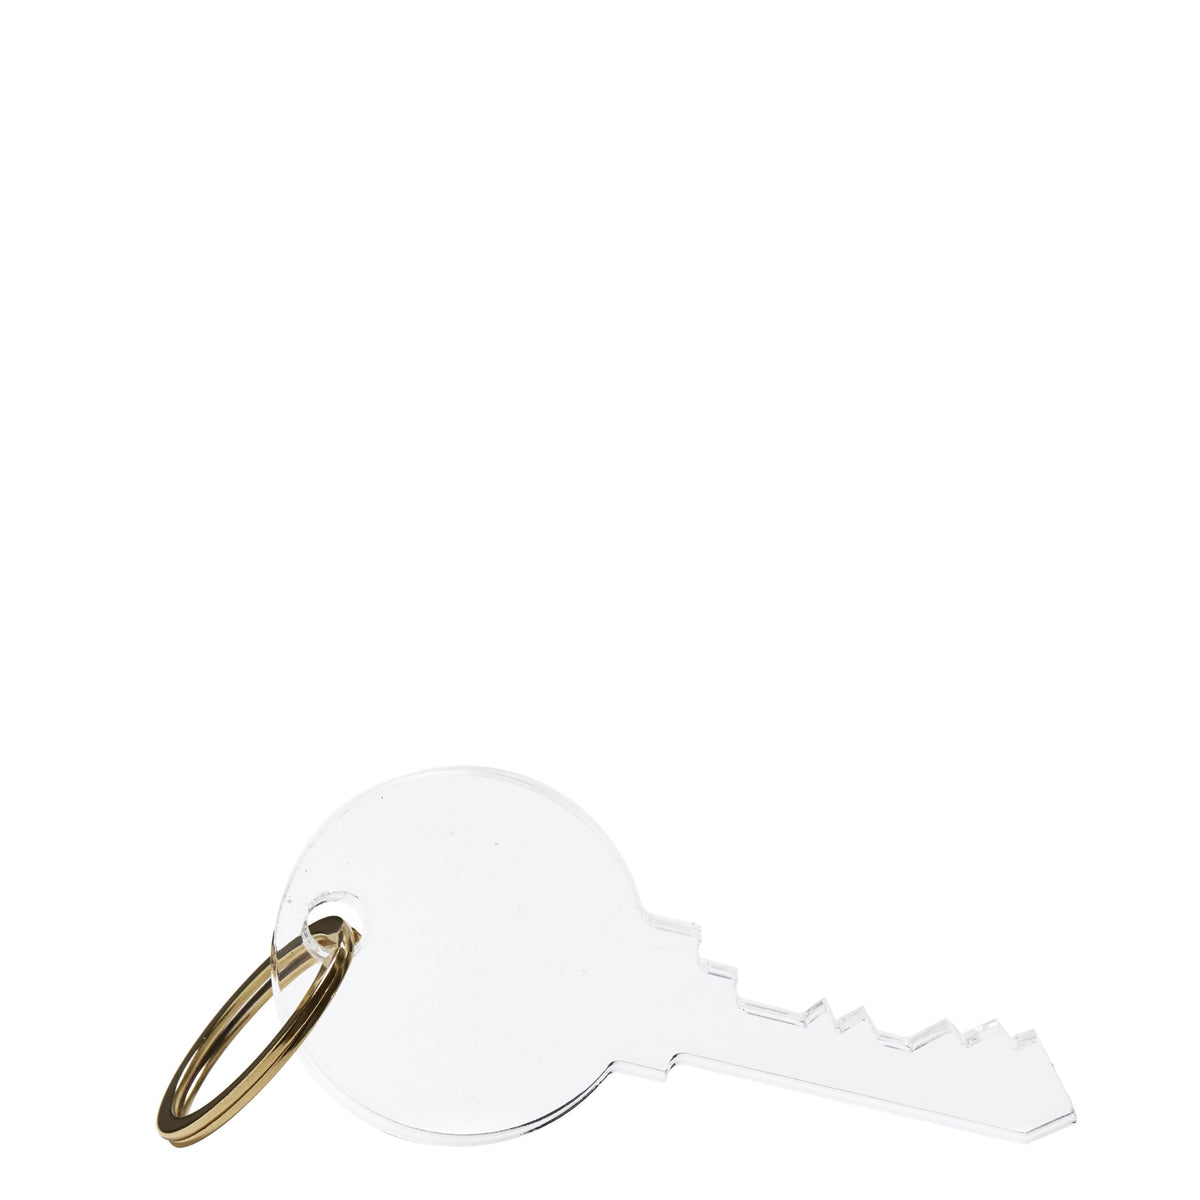 Keychain KEY ICON 3.5 inches length